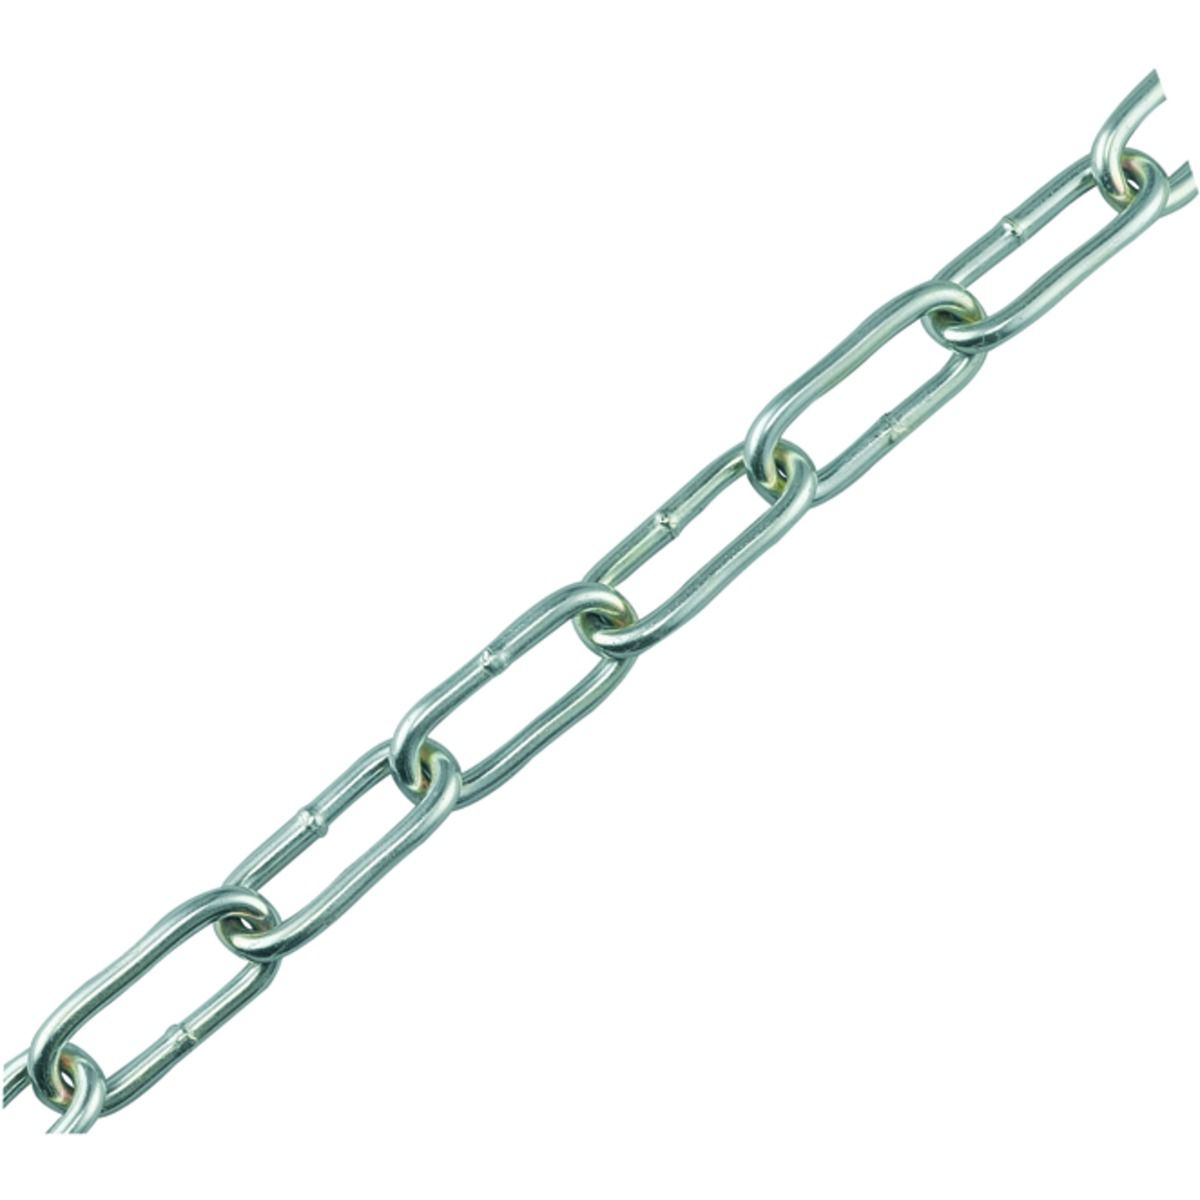 Wickes Zinc Plated Steel Welded Chain - 5 x 35mm x 2m